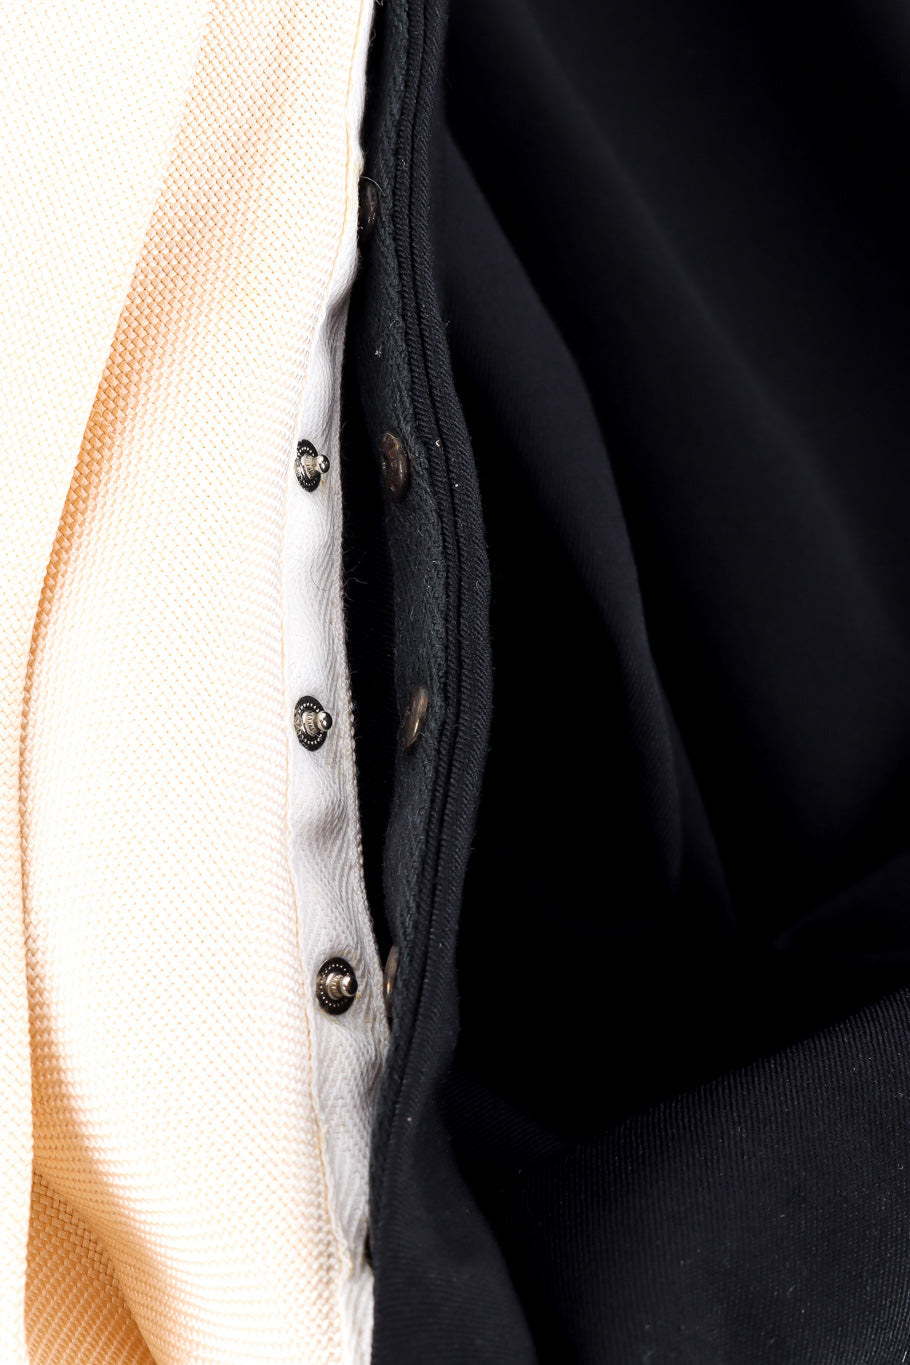 Vintage Yves Saint Laurent Collared Blazer Dress collar single snap closure closeup @Recessla